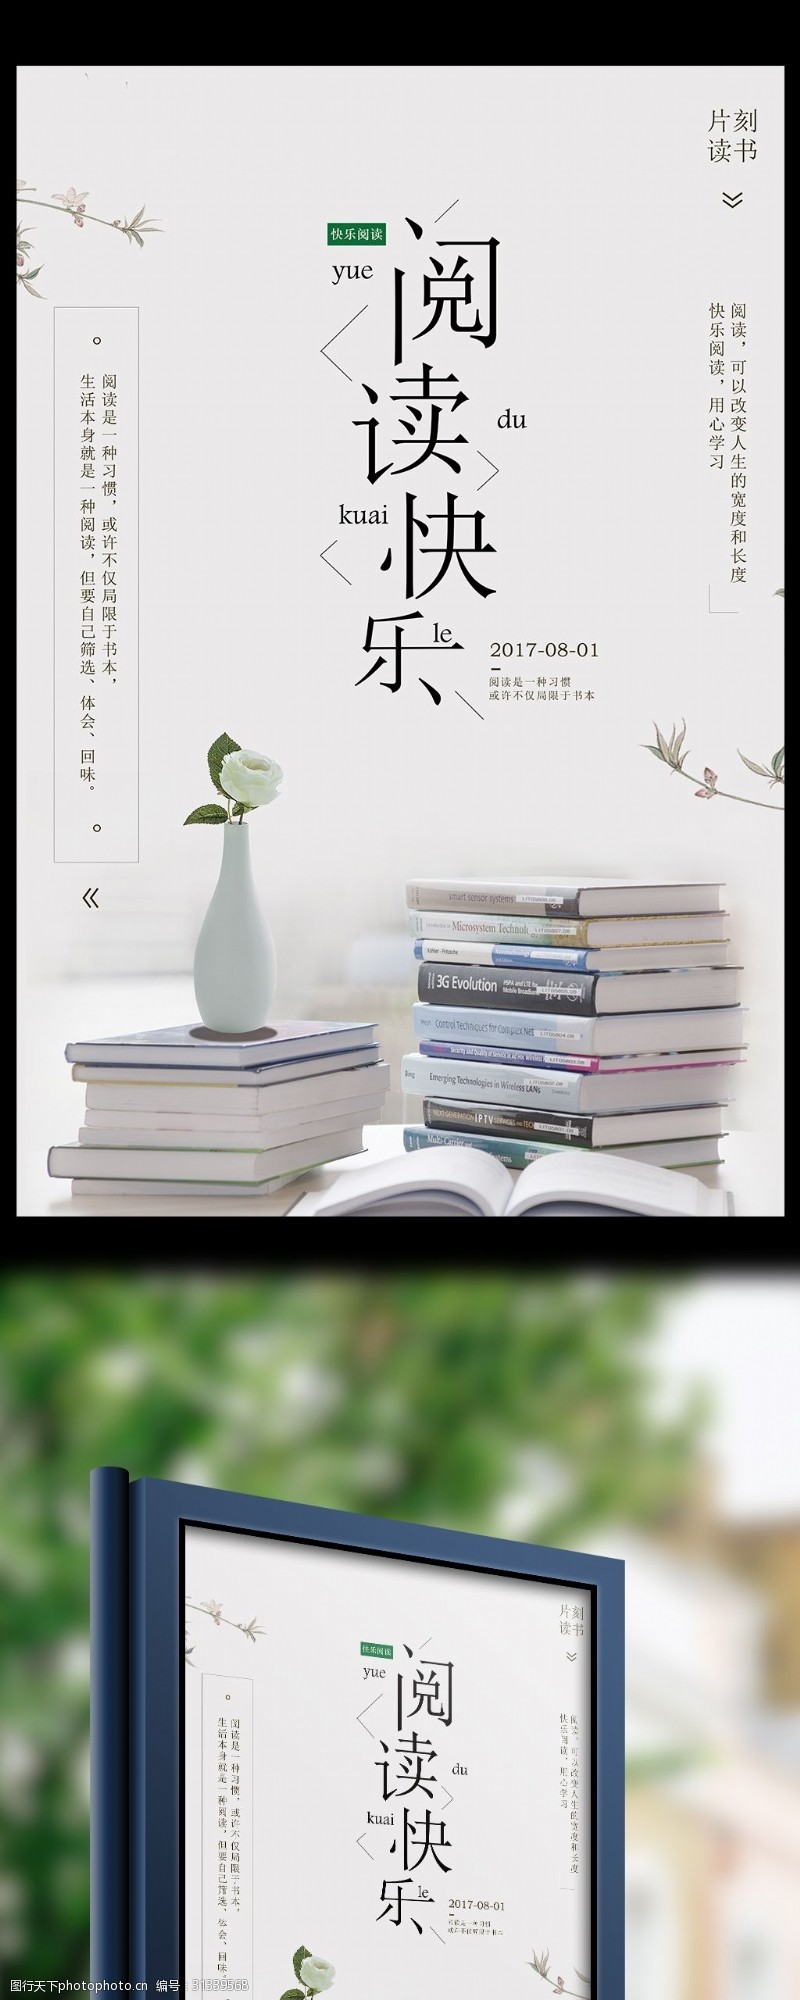 300dpi文艺清新快乐阅读简约海报设计